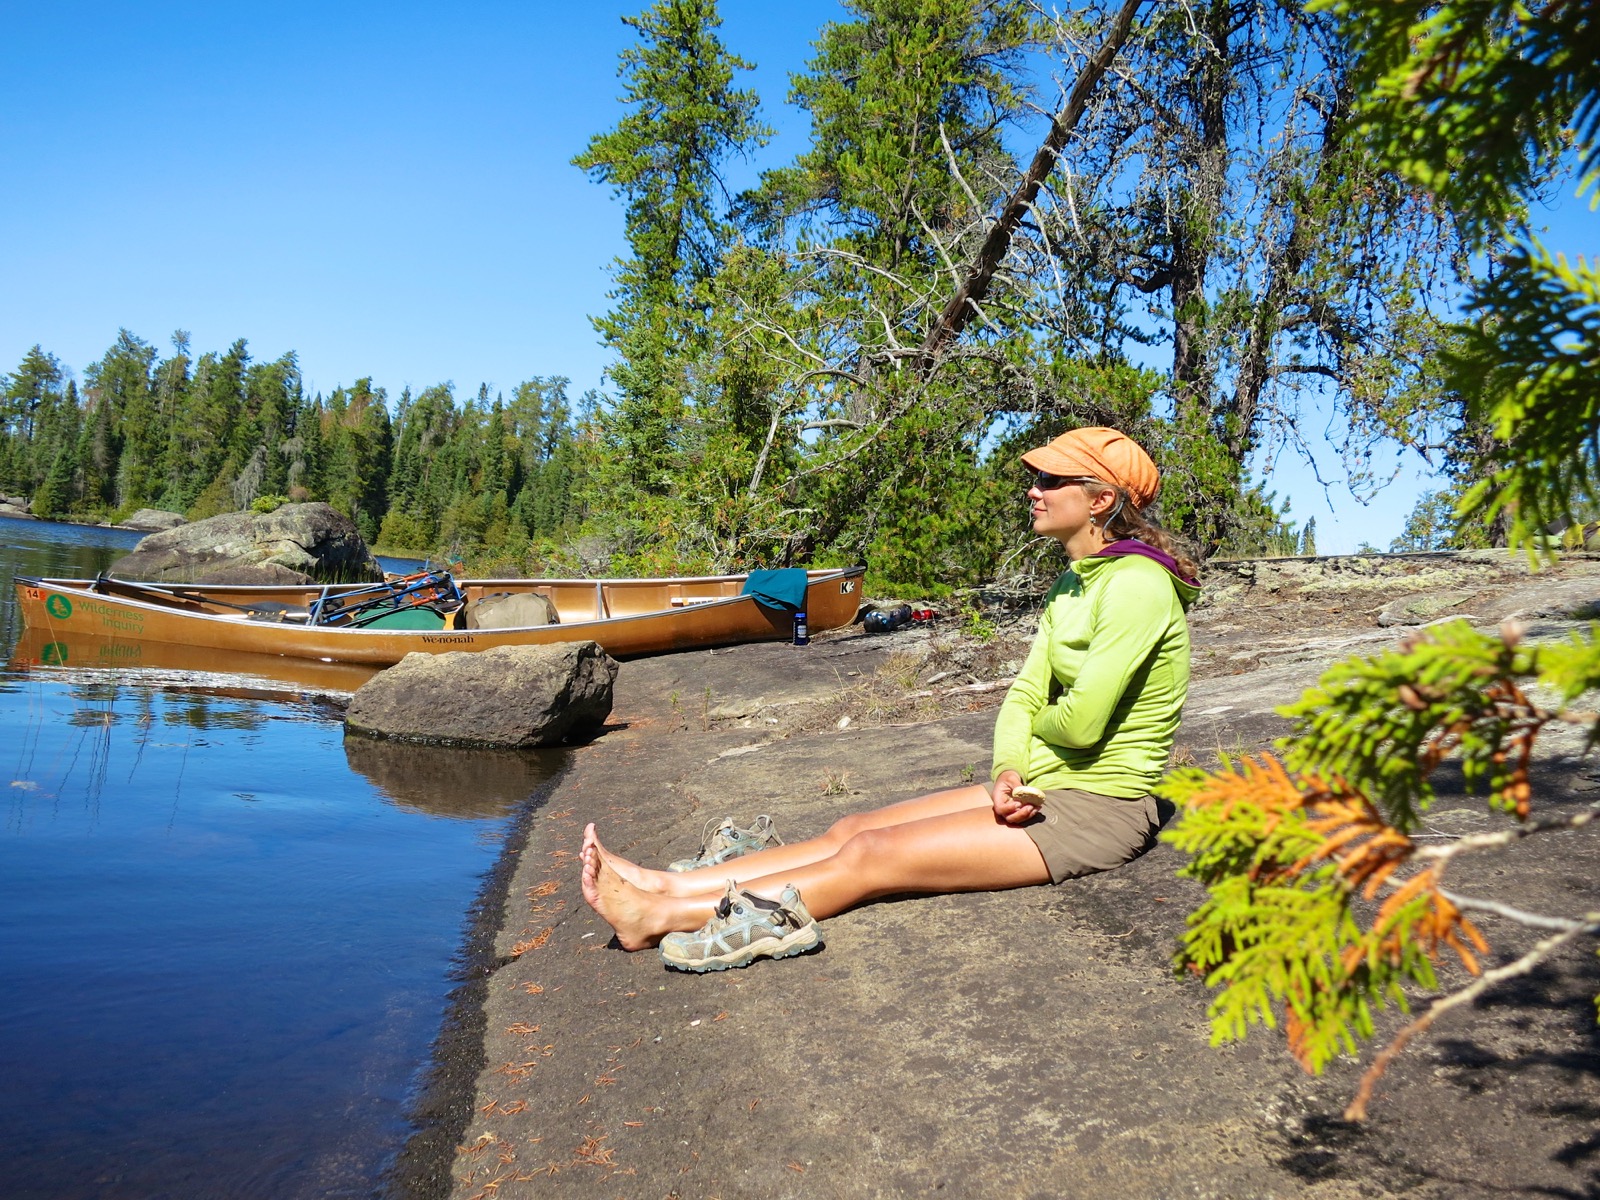 boundary waters canoe trip videos